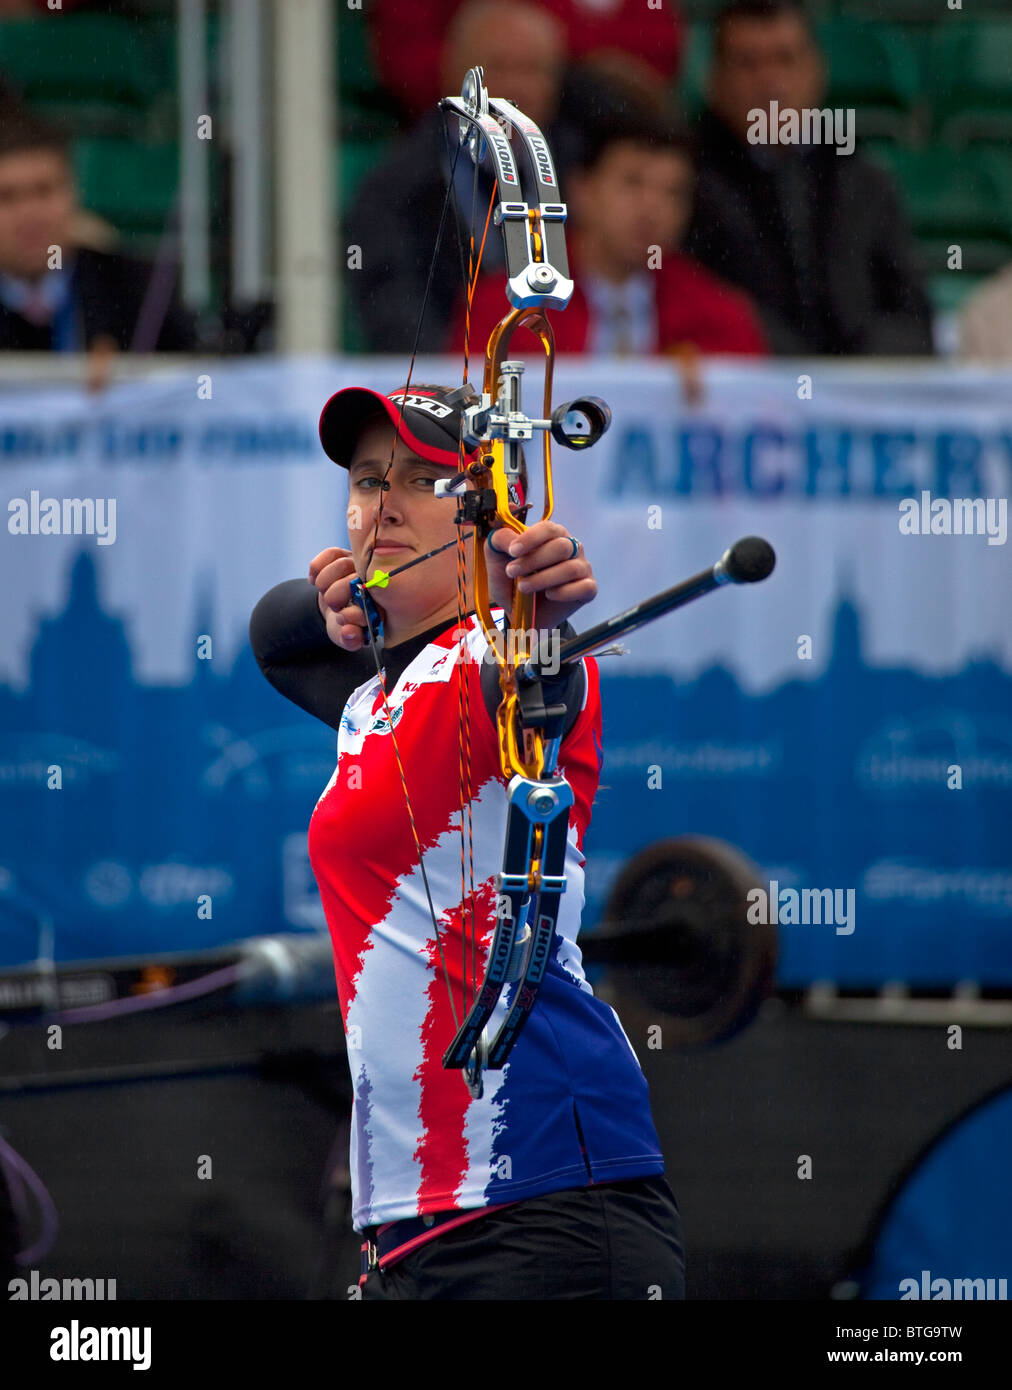 Nicky Hunt Uk Archer with Compound Bow, Archery World Cup event, Edinburgh, Scotland UK, Europe Stock Photo